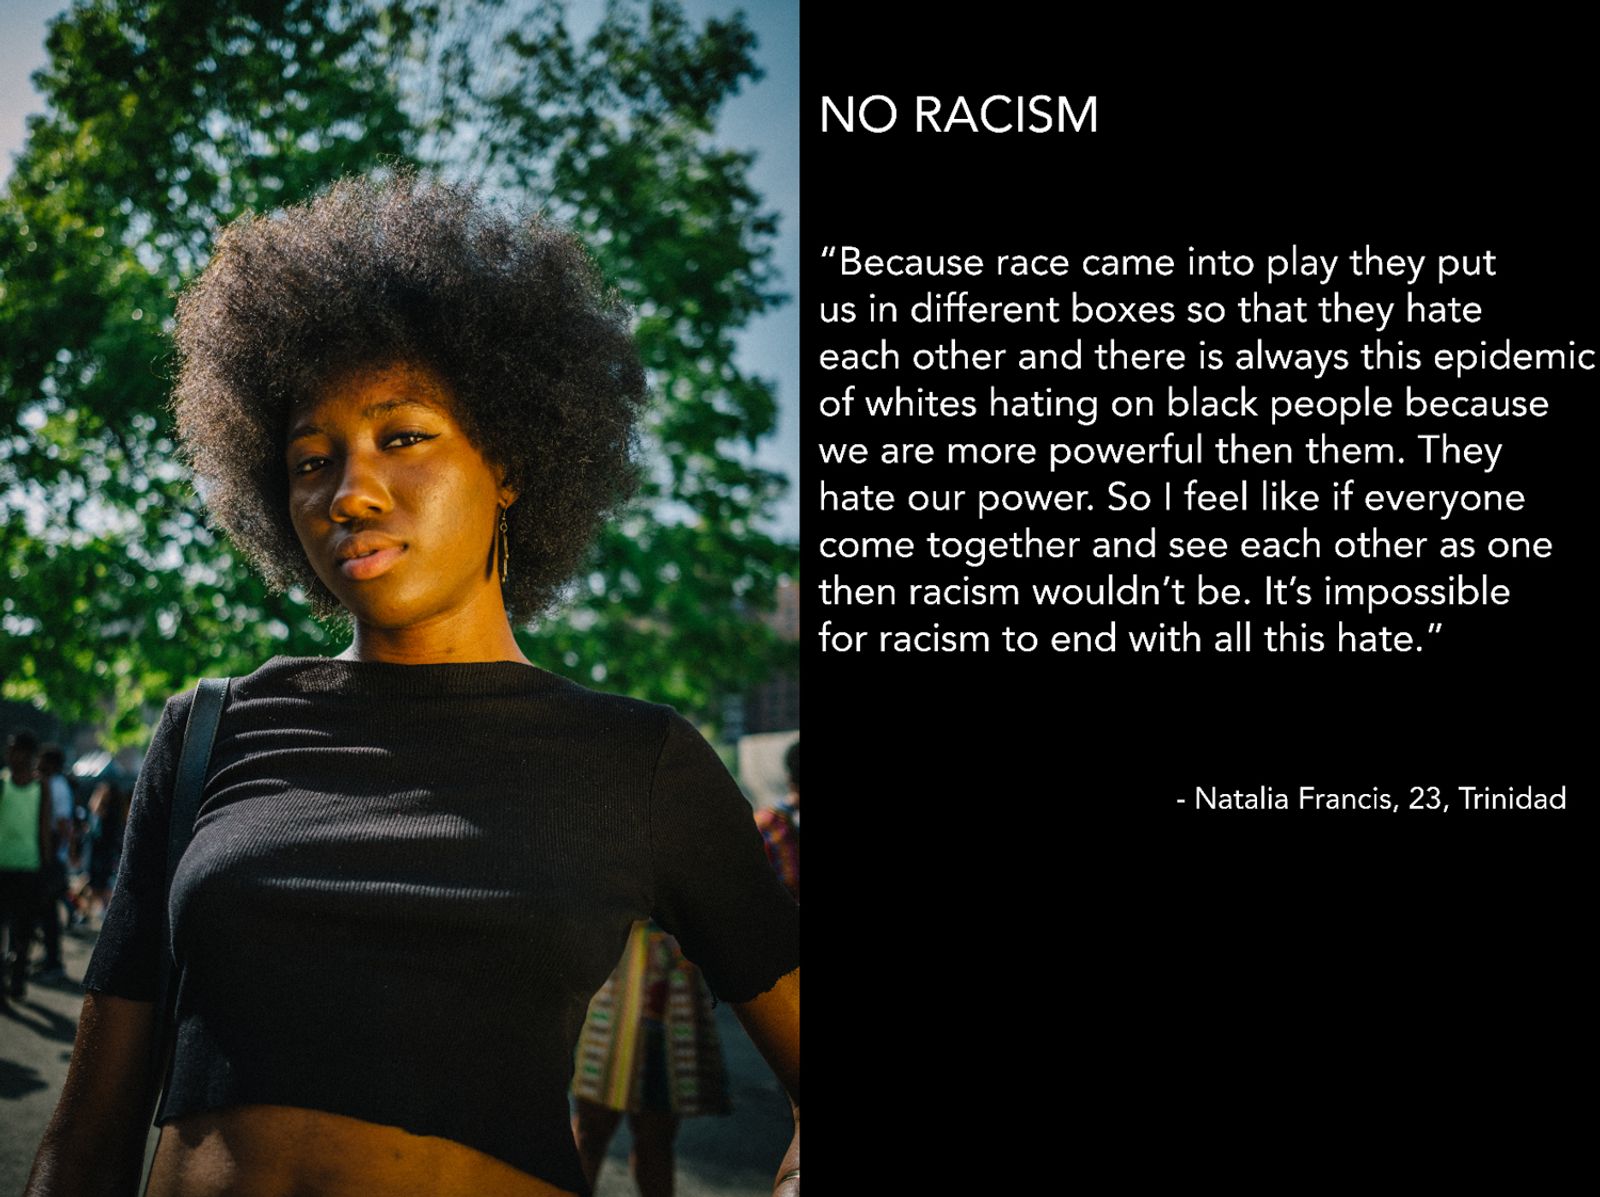 © Melissa Bunni Elian - Image from the Afropunk X Ferguson photography project